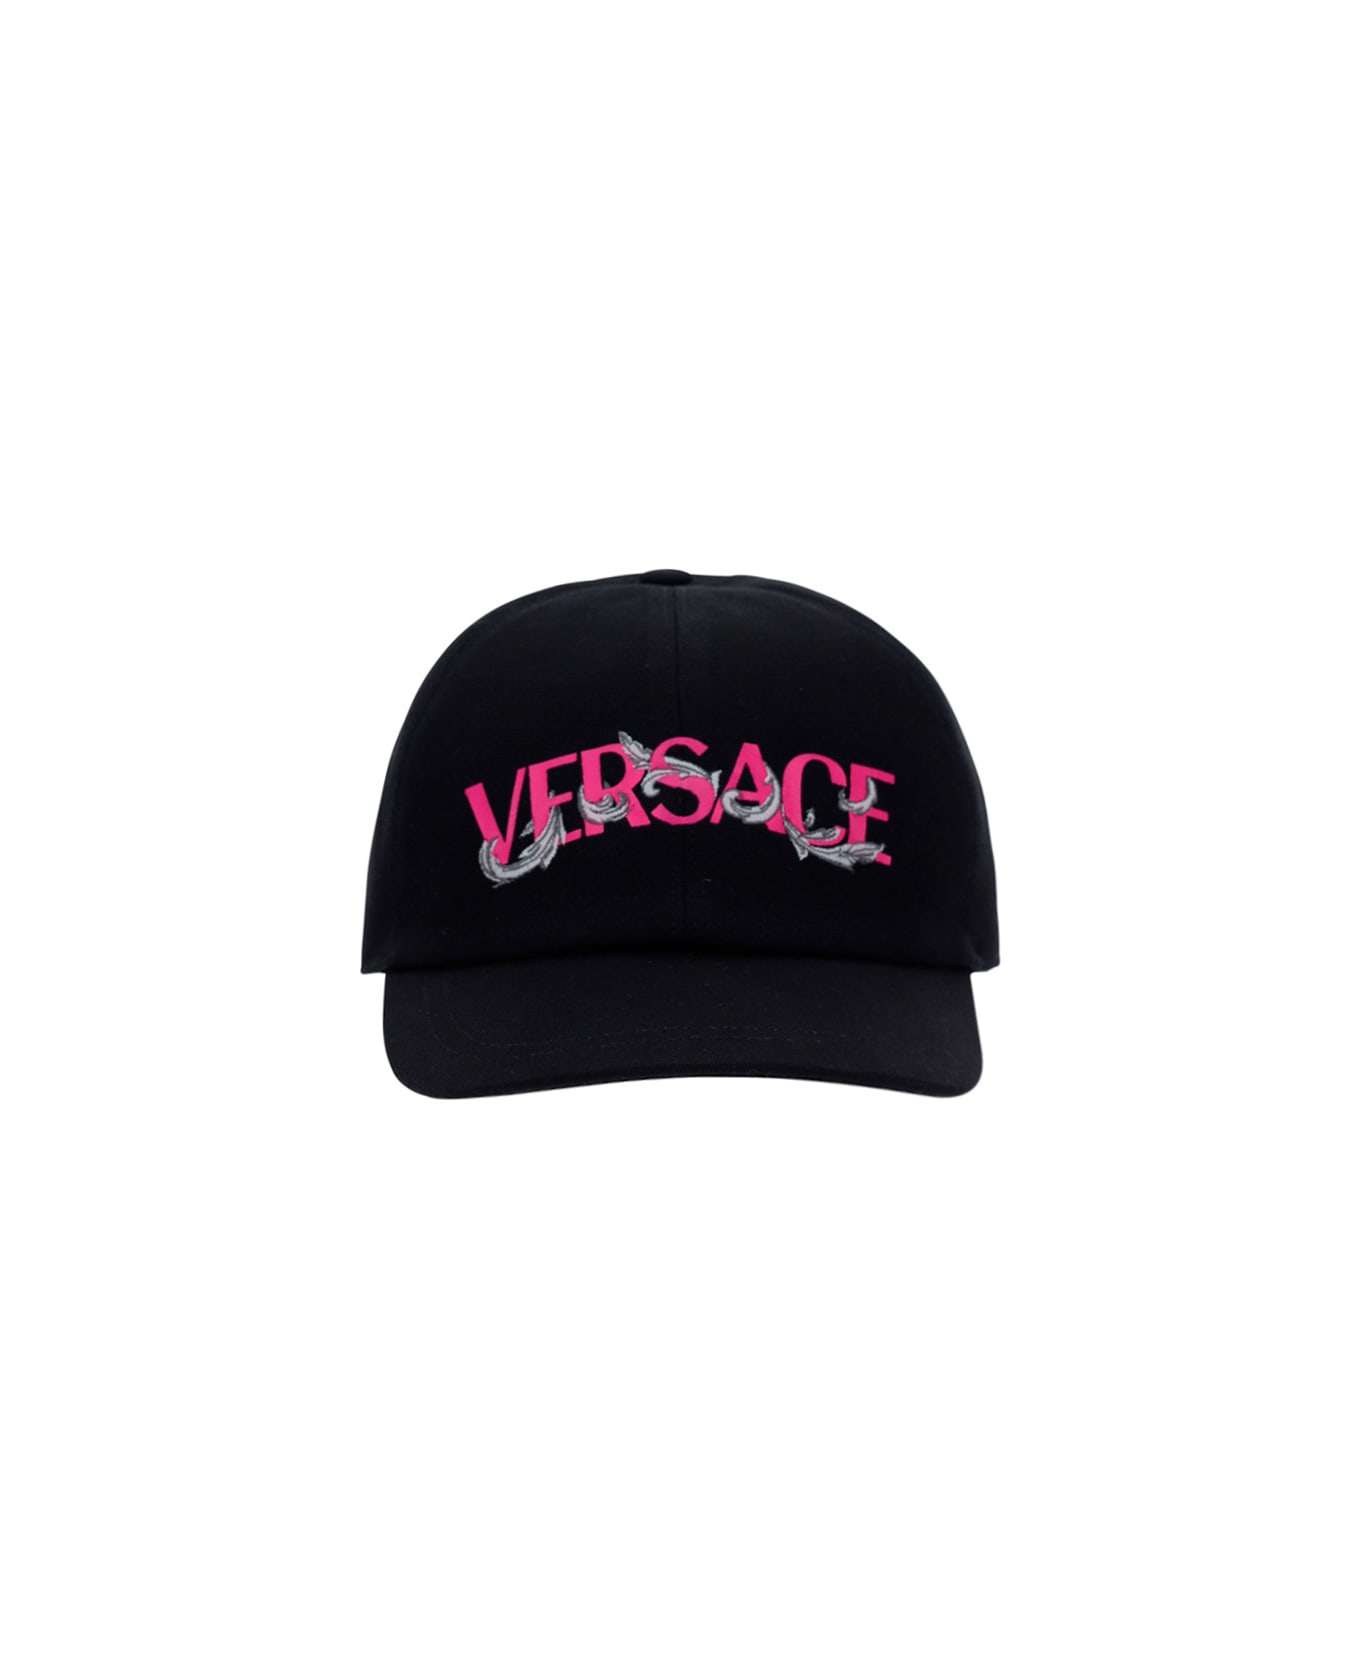 Versace Baseball Cap - Nero+fuchsia+argento